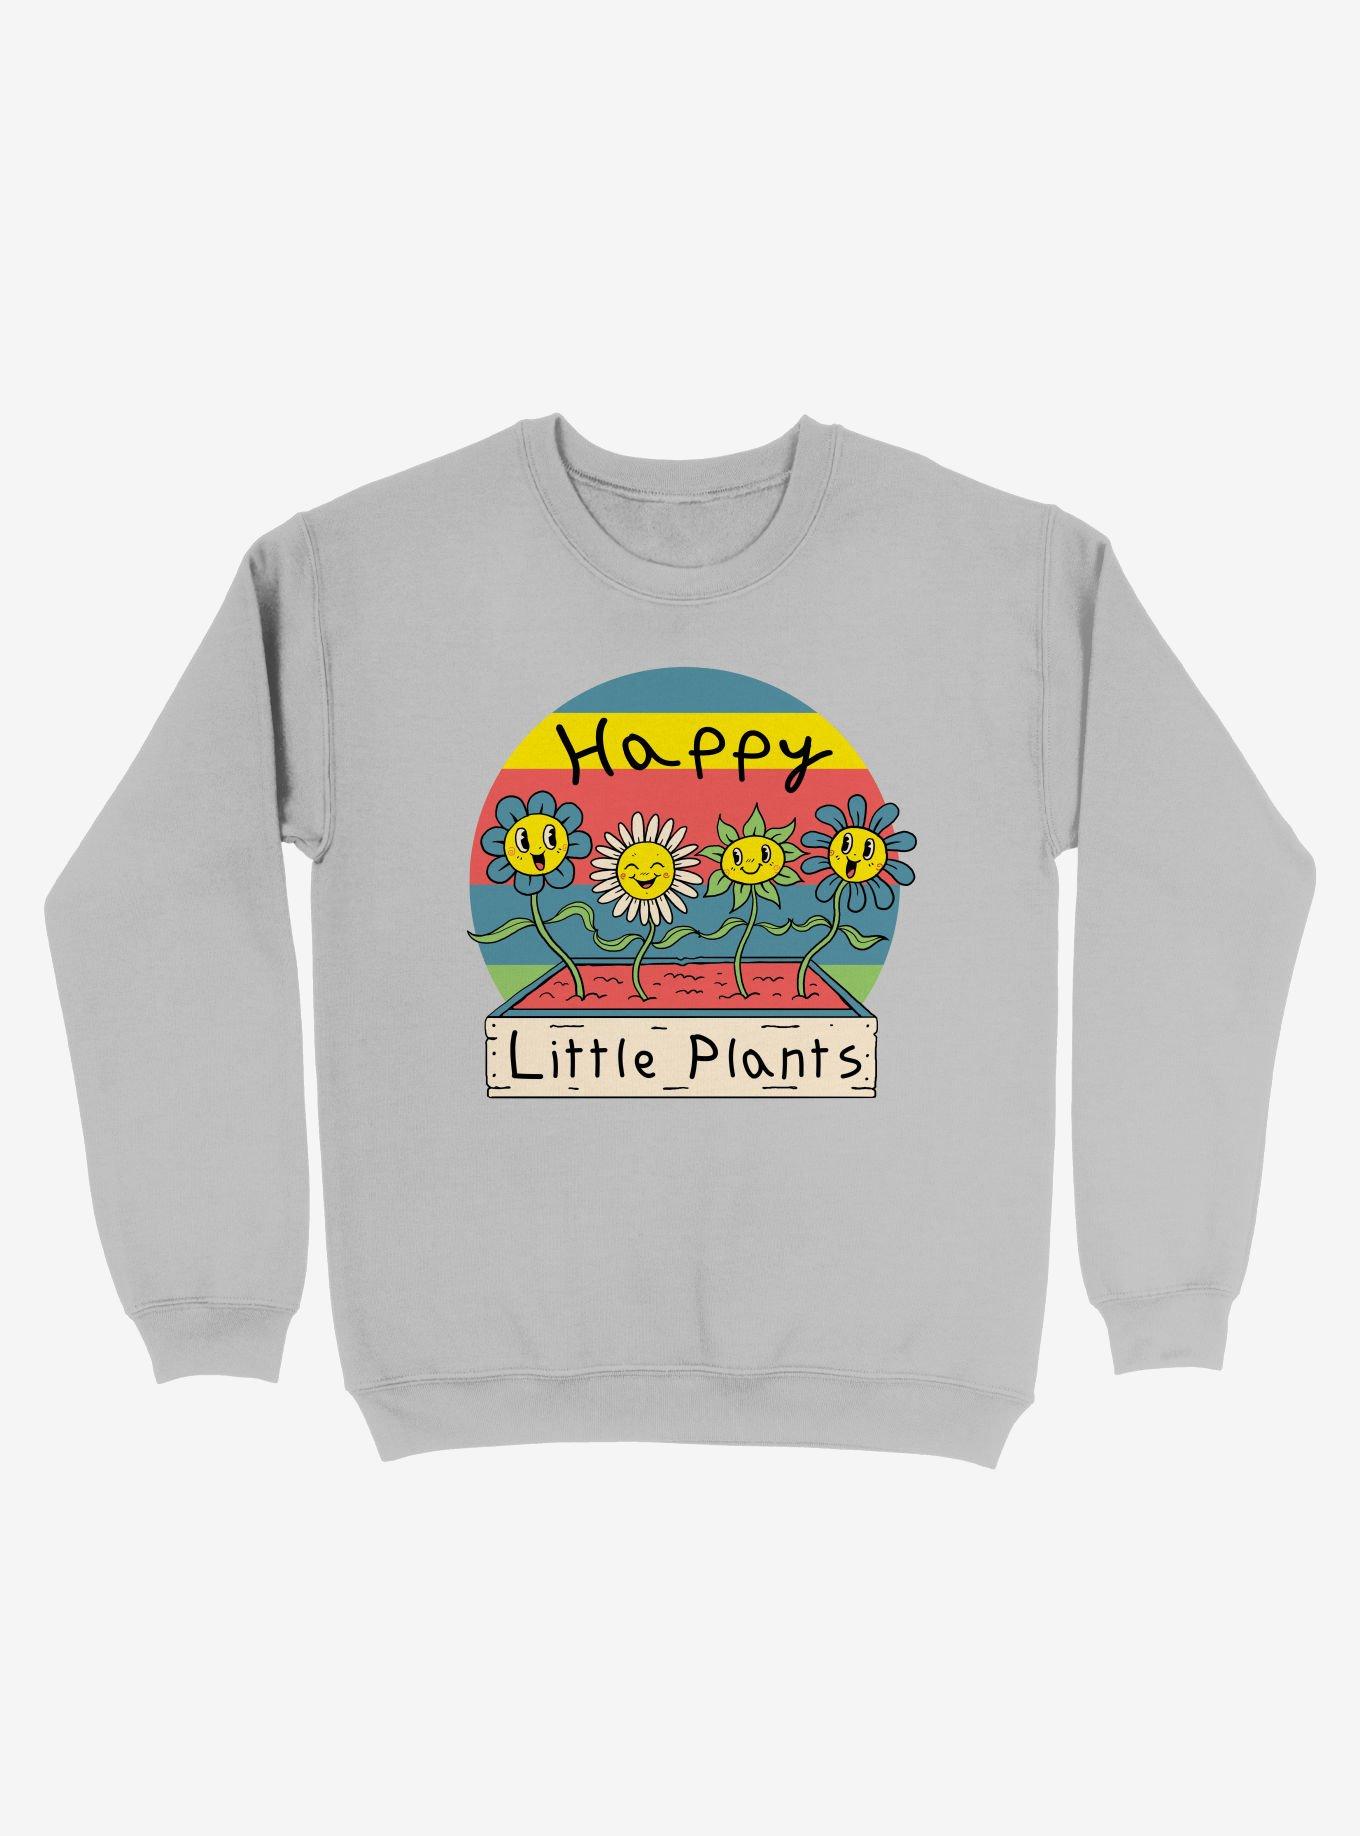 Happy Little Plants Sweatshirt, SILVER, hi-res